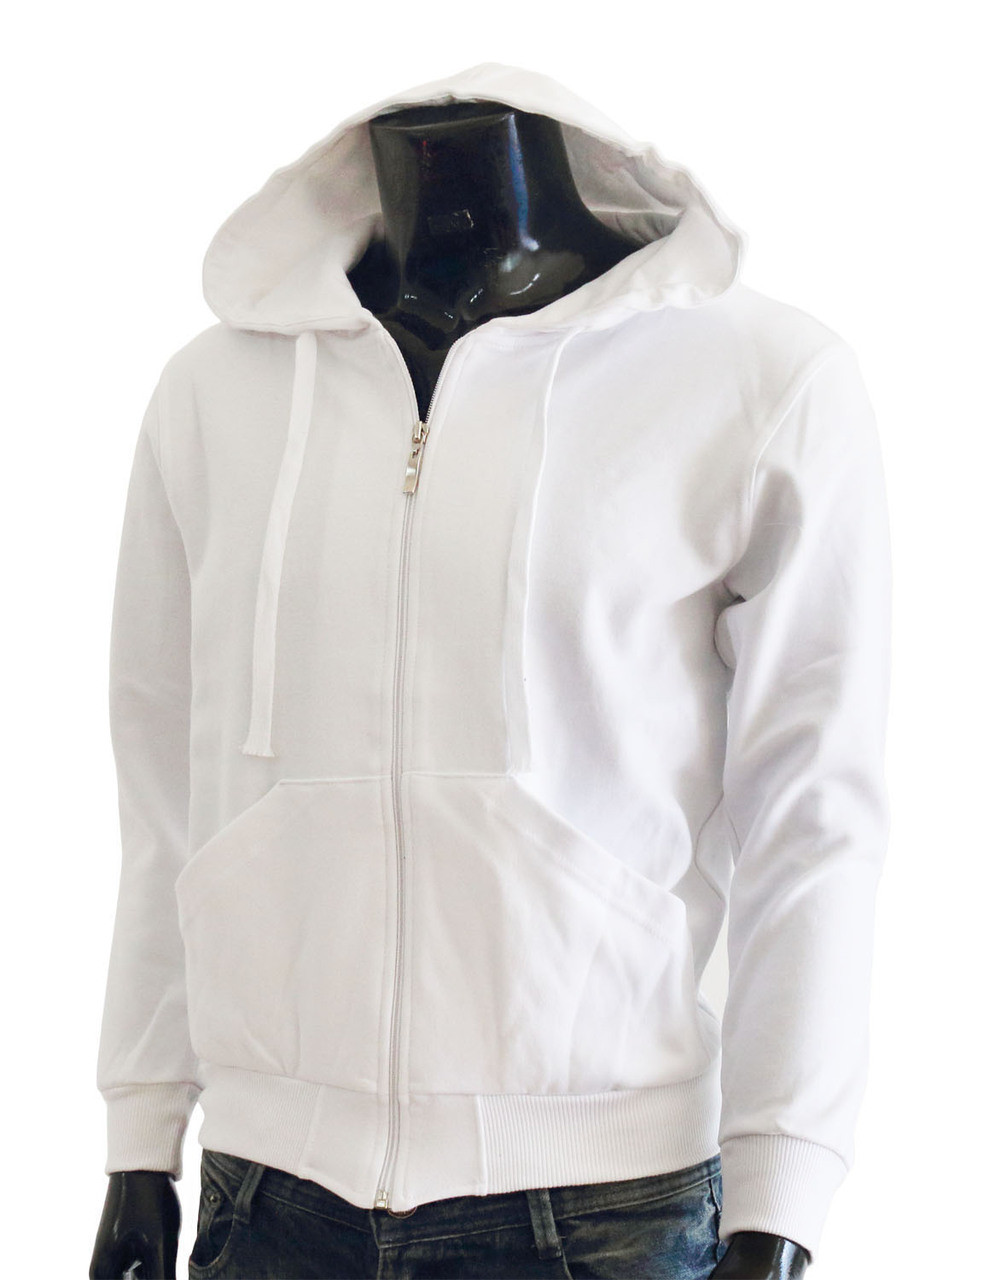 BCPOLO zipper hoodie jumper Zip-Hoodie, Solid Cotton Zip-up hoodie ...